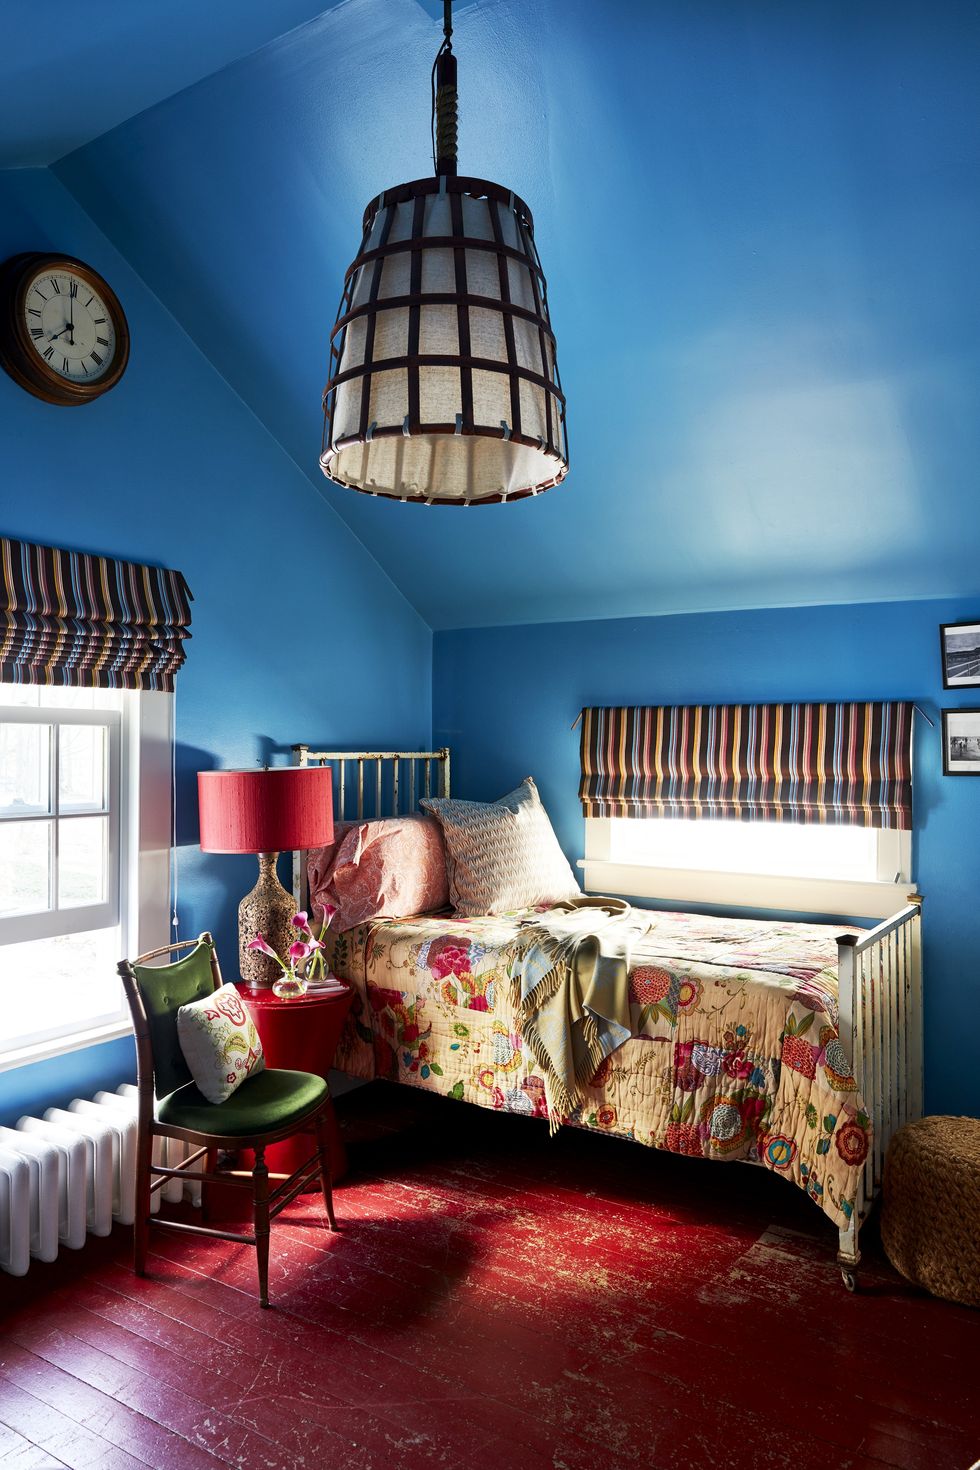 furniture, bedroom, lampshade, room, interior design, blue, bed, lighting accessory, ceiling, bed frame,